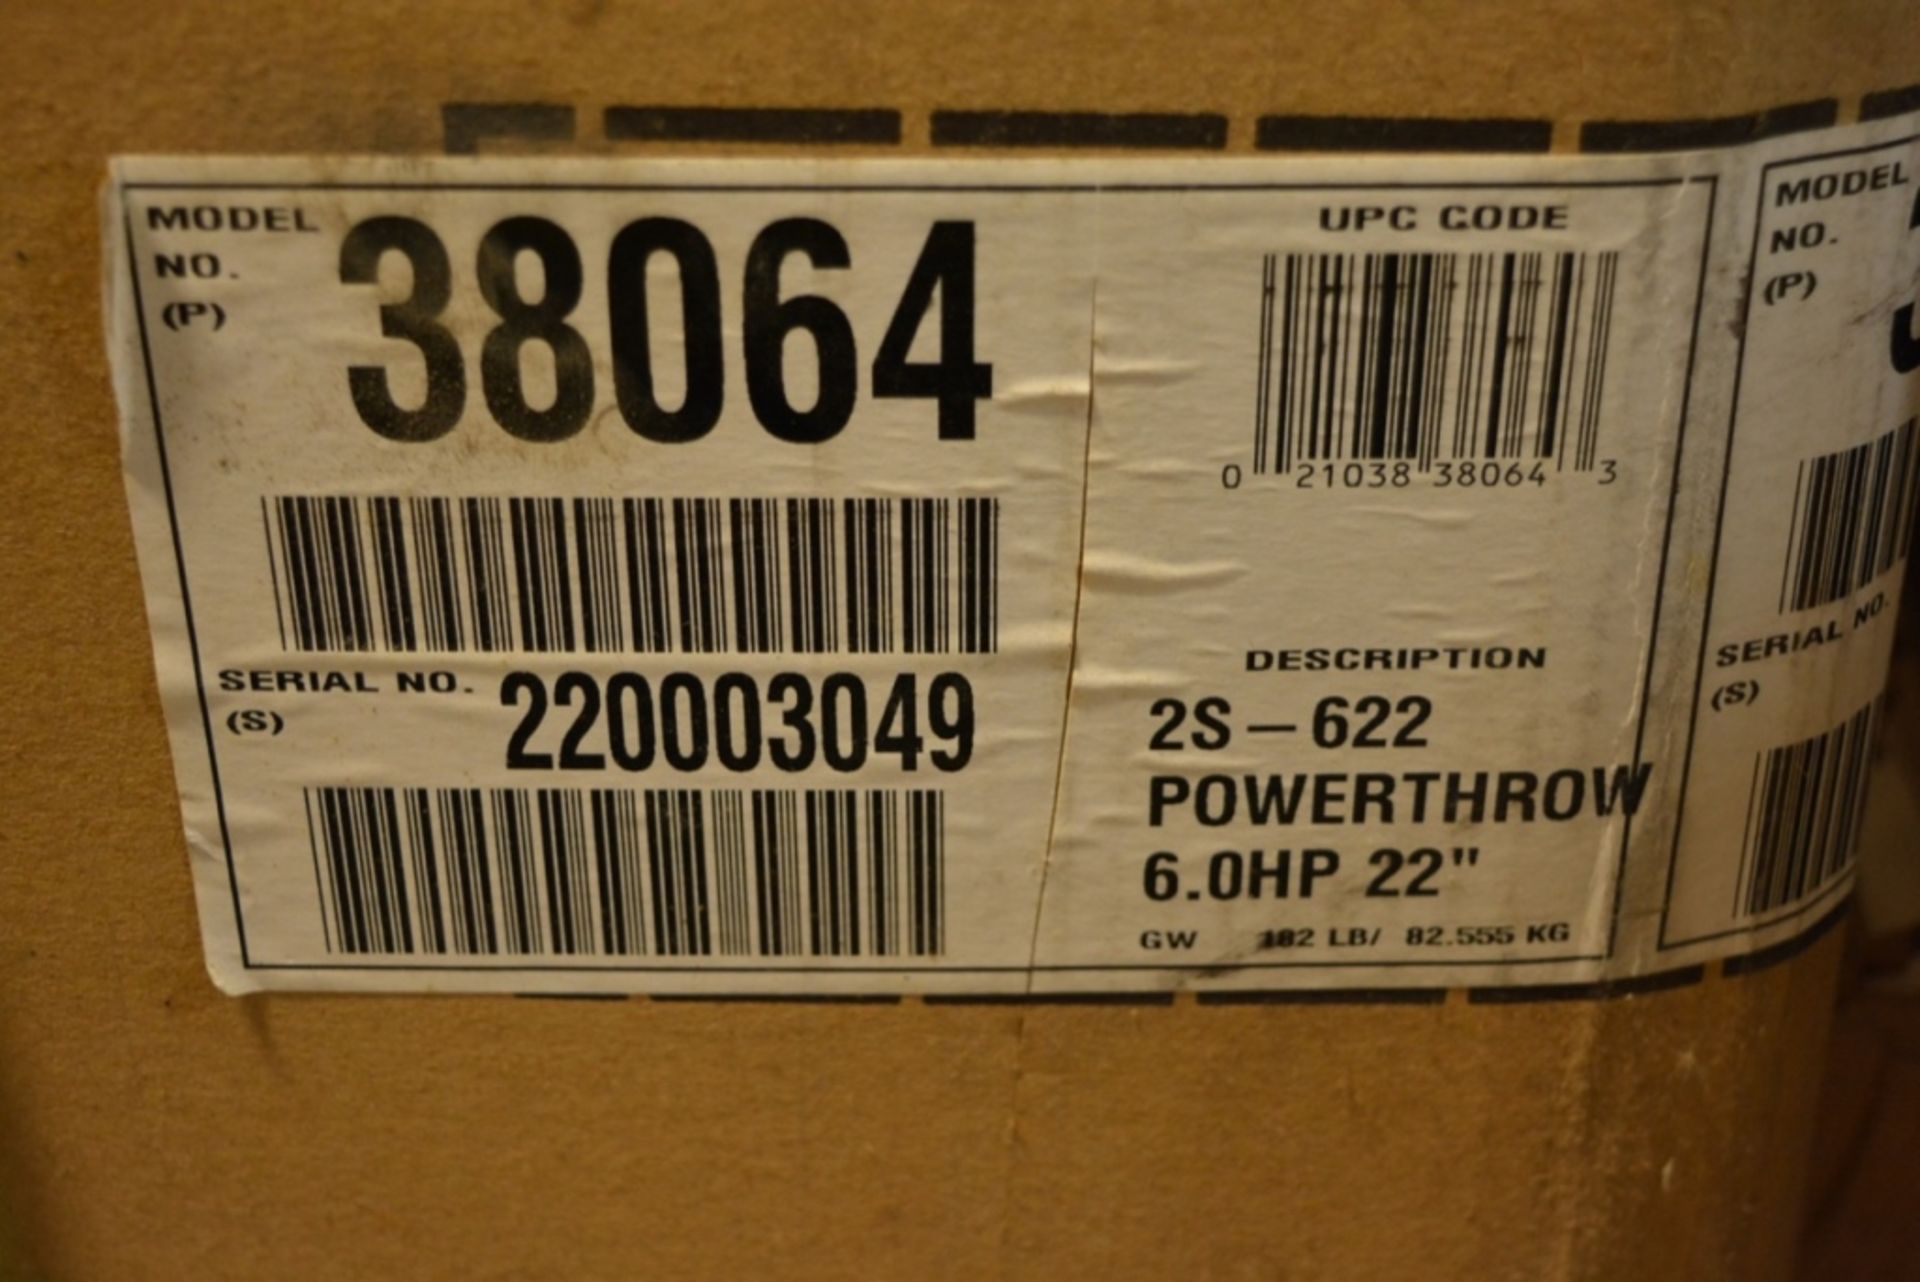 Toro Power Throw Snowblower #38064 New In Box - Bild 2 aus 2